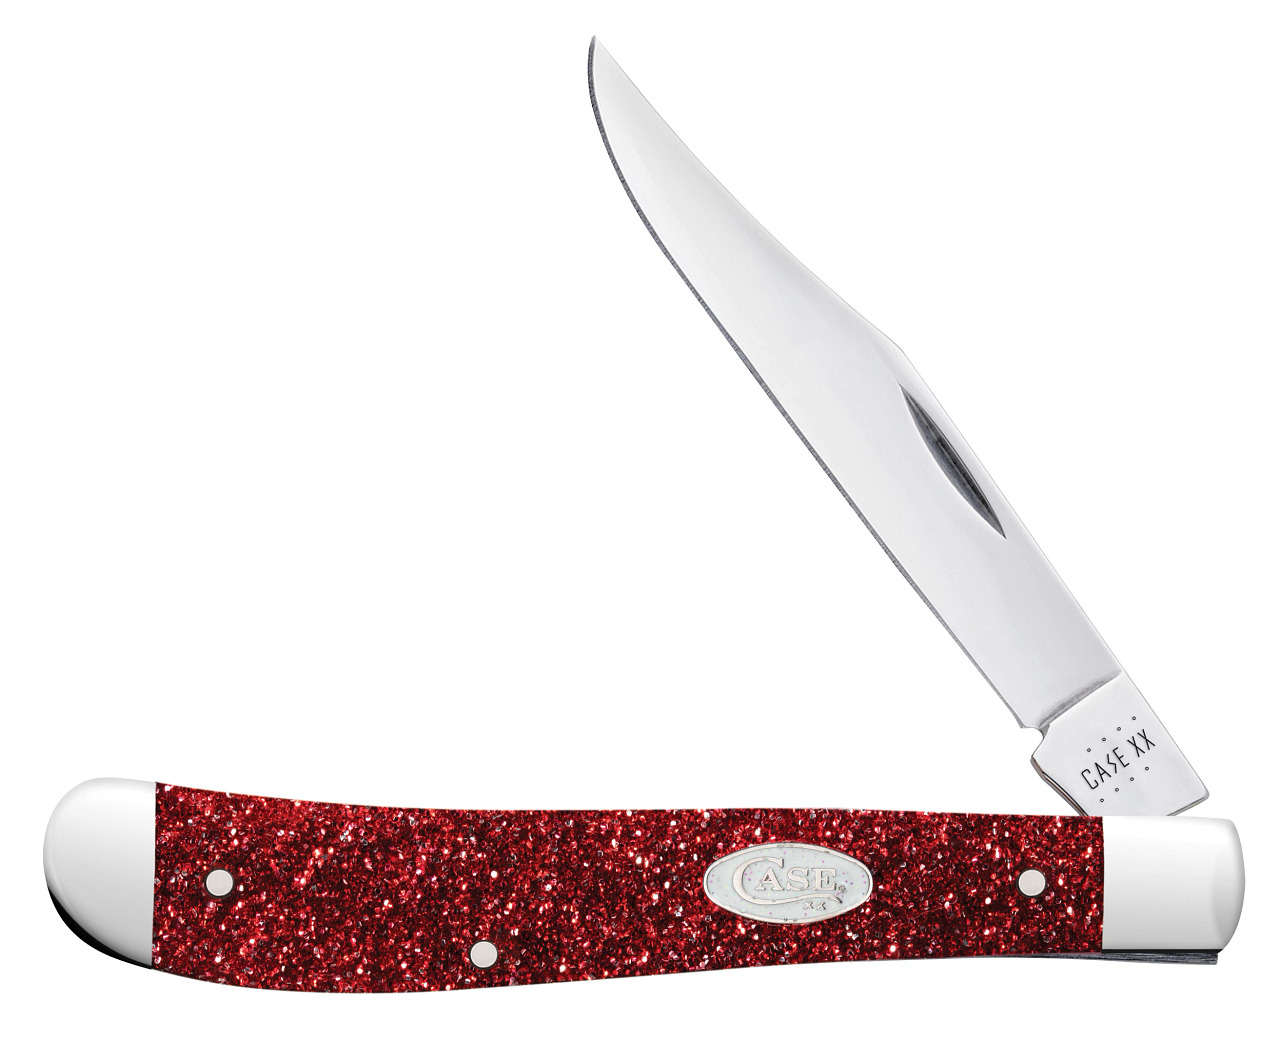 Case xx Knives Red Ruby Stardust Slimline Trapper 67006 Stainless Pocket Knife